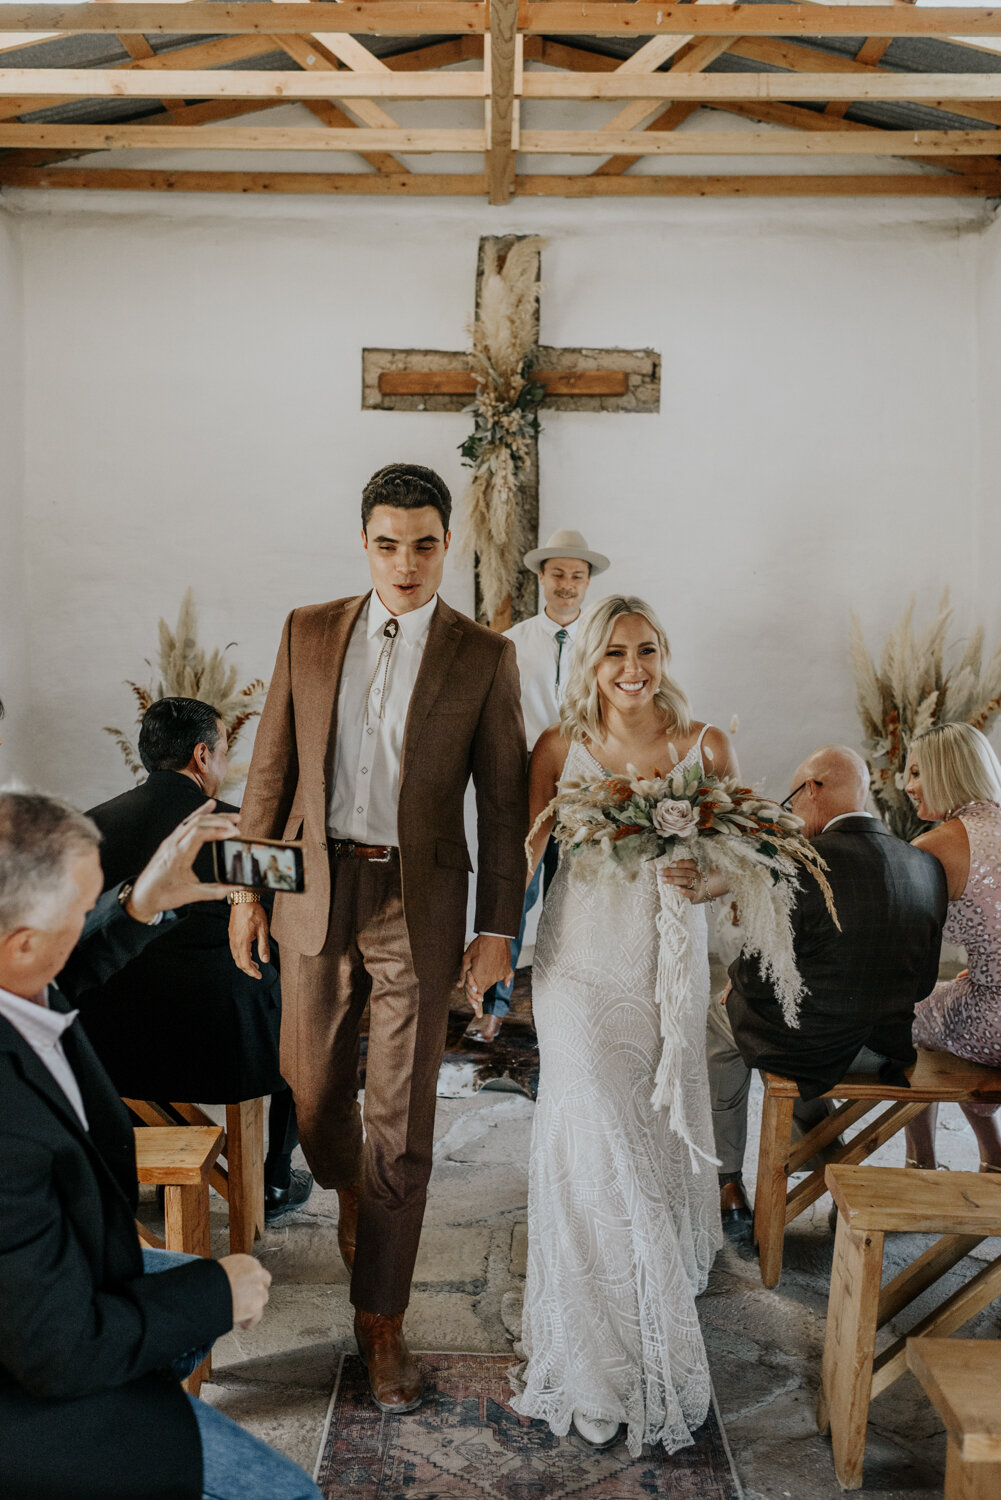 Calera Chapel in Balmorhea, TX Unique Wedding Photography